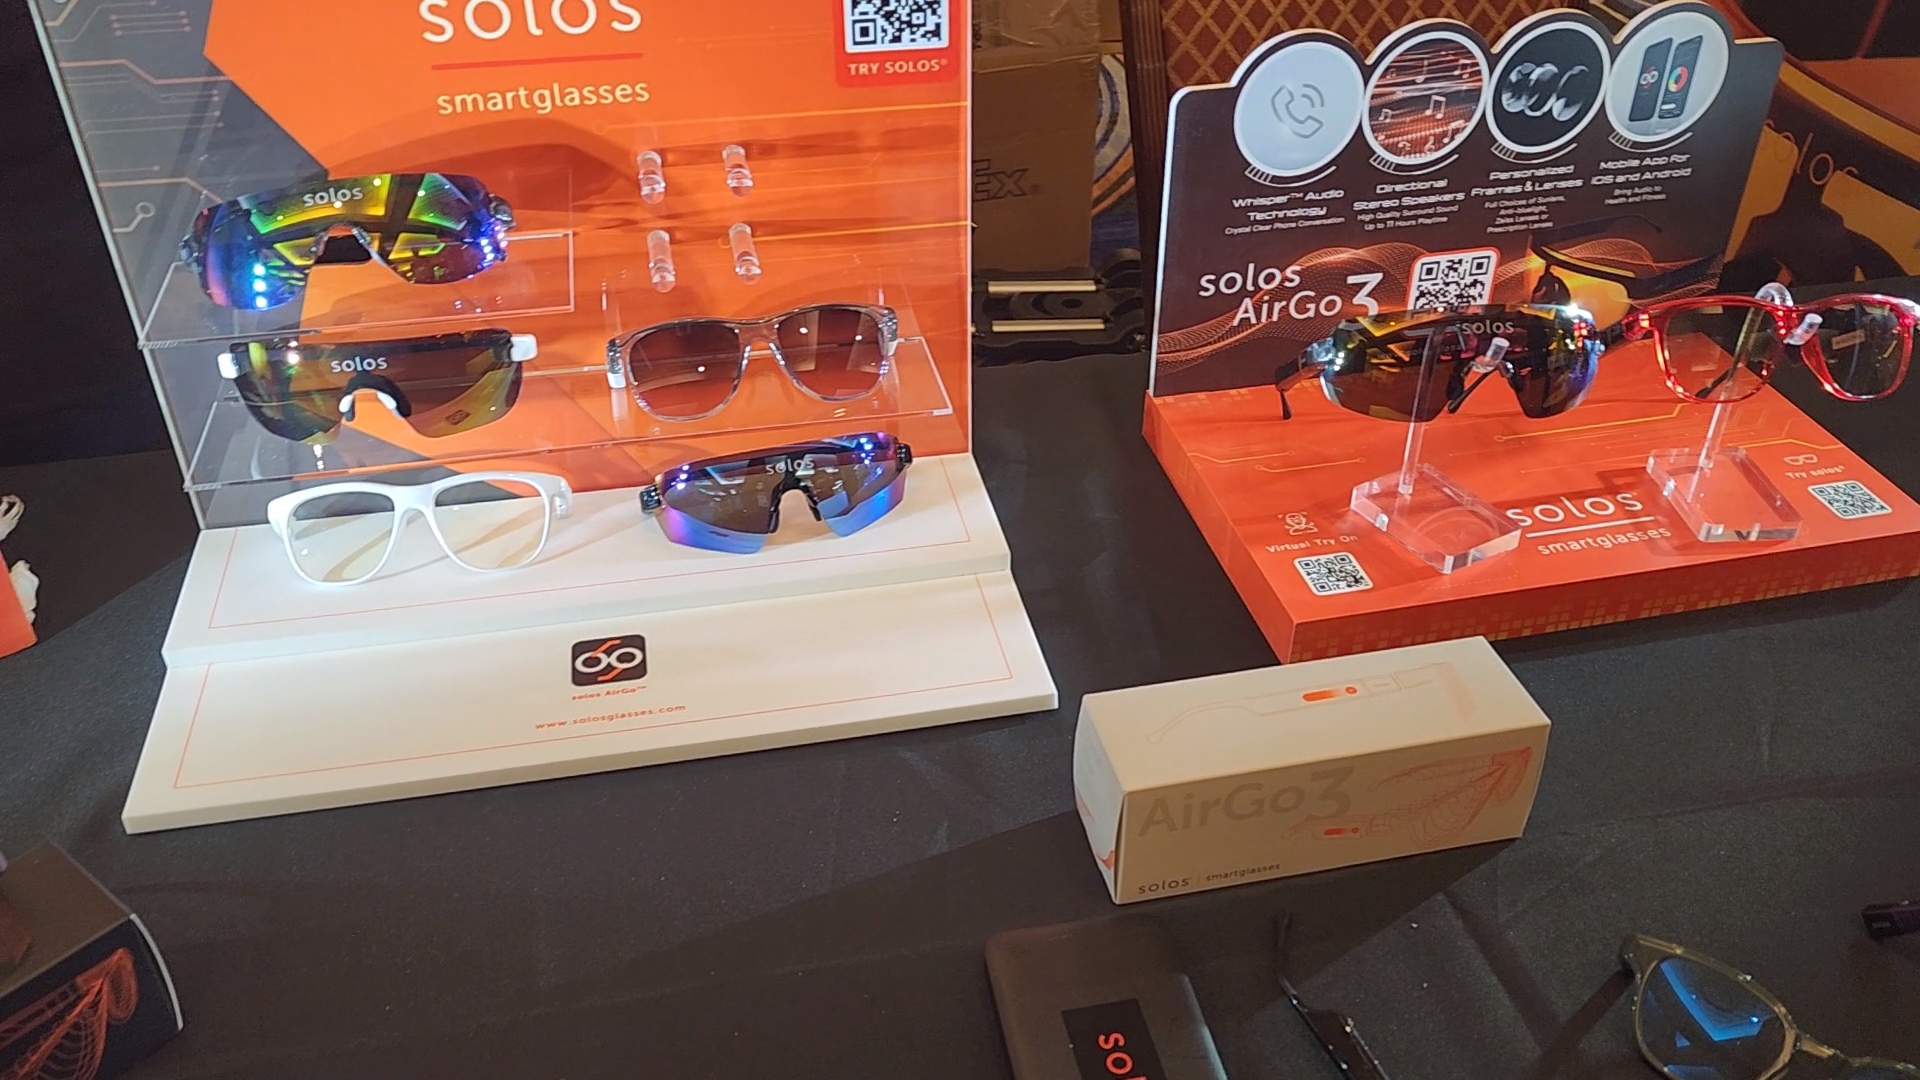 Solos AirGo3 smart glasses